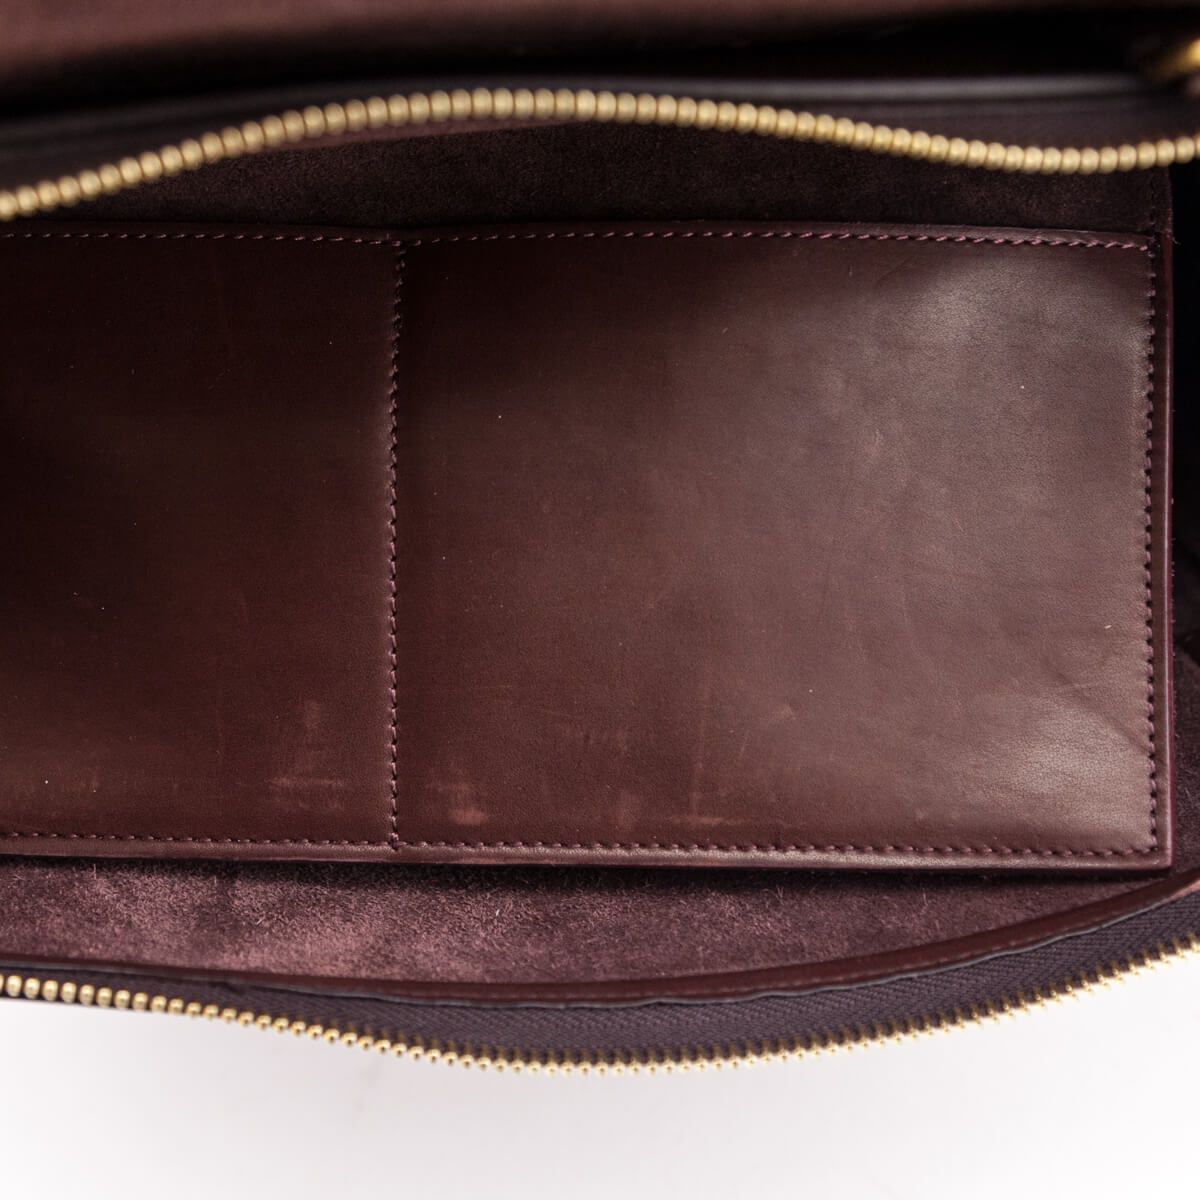 Celine Bordeaux Smooth Calfskin Mini Belt Bag - Love that Bag etc - Preowned Authentic Designer Handbags & Preloved Fashions